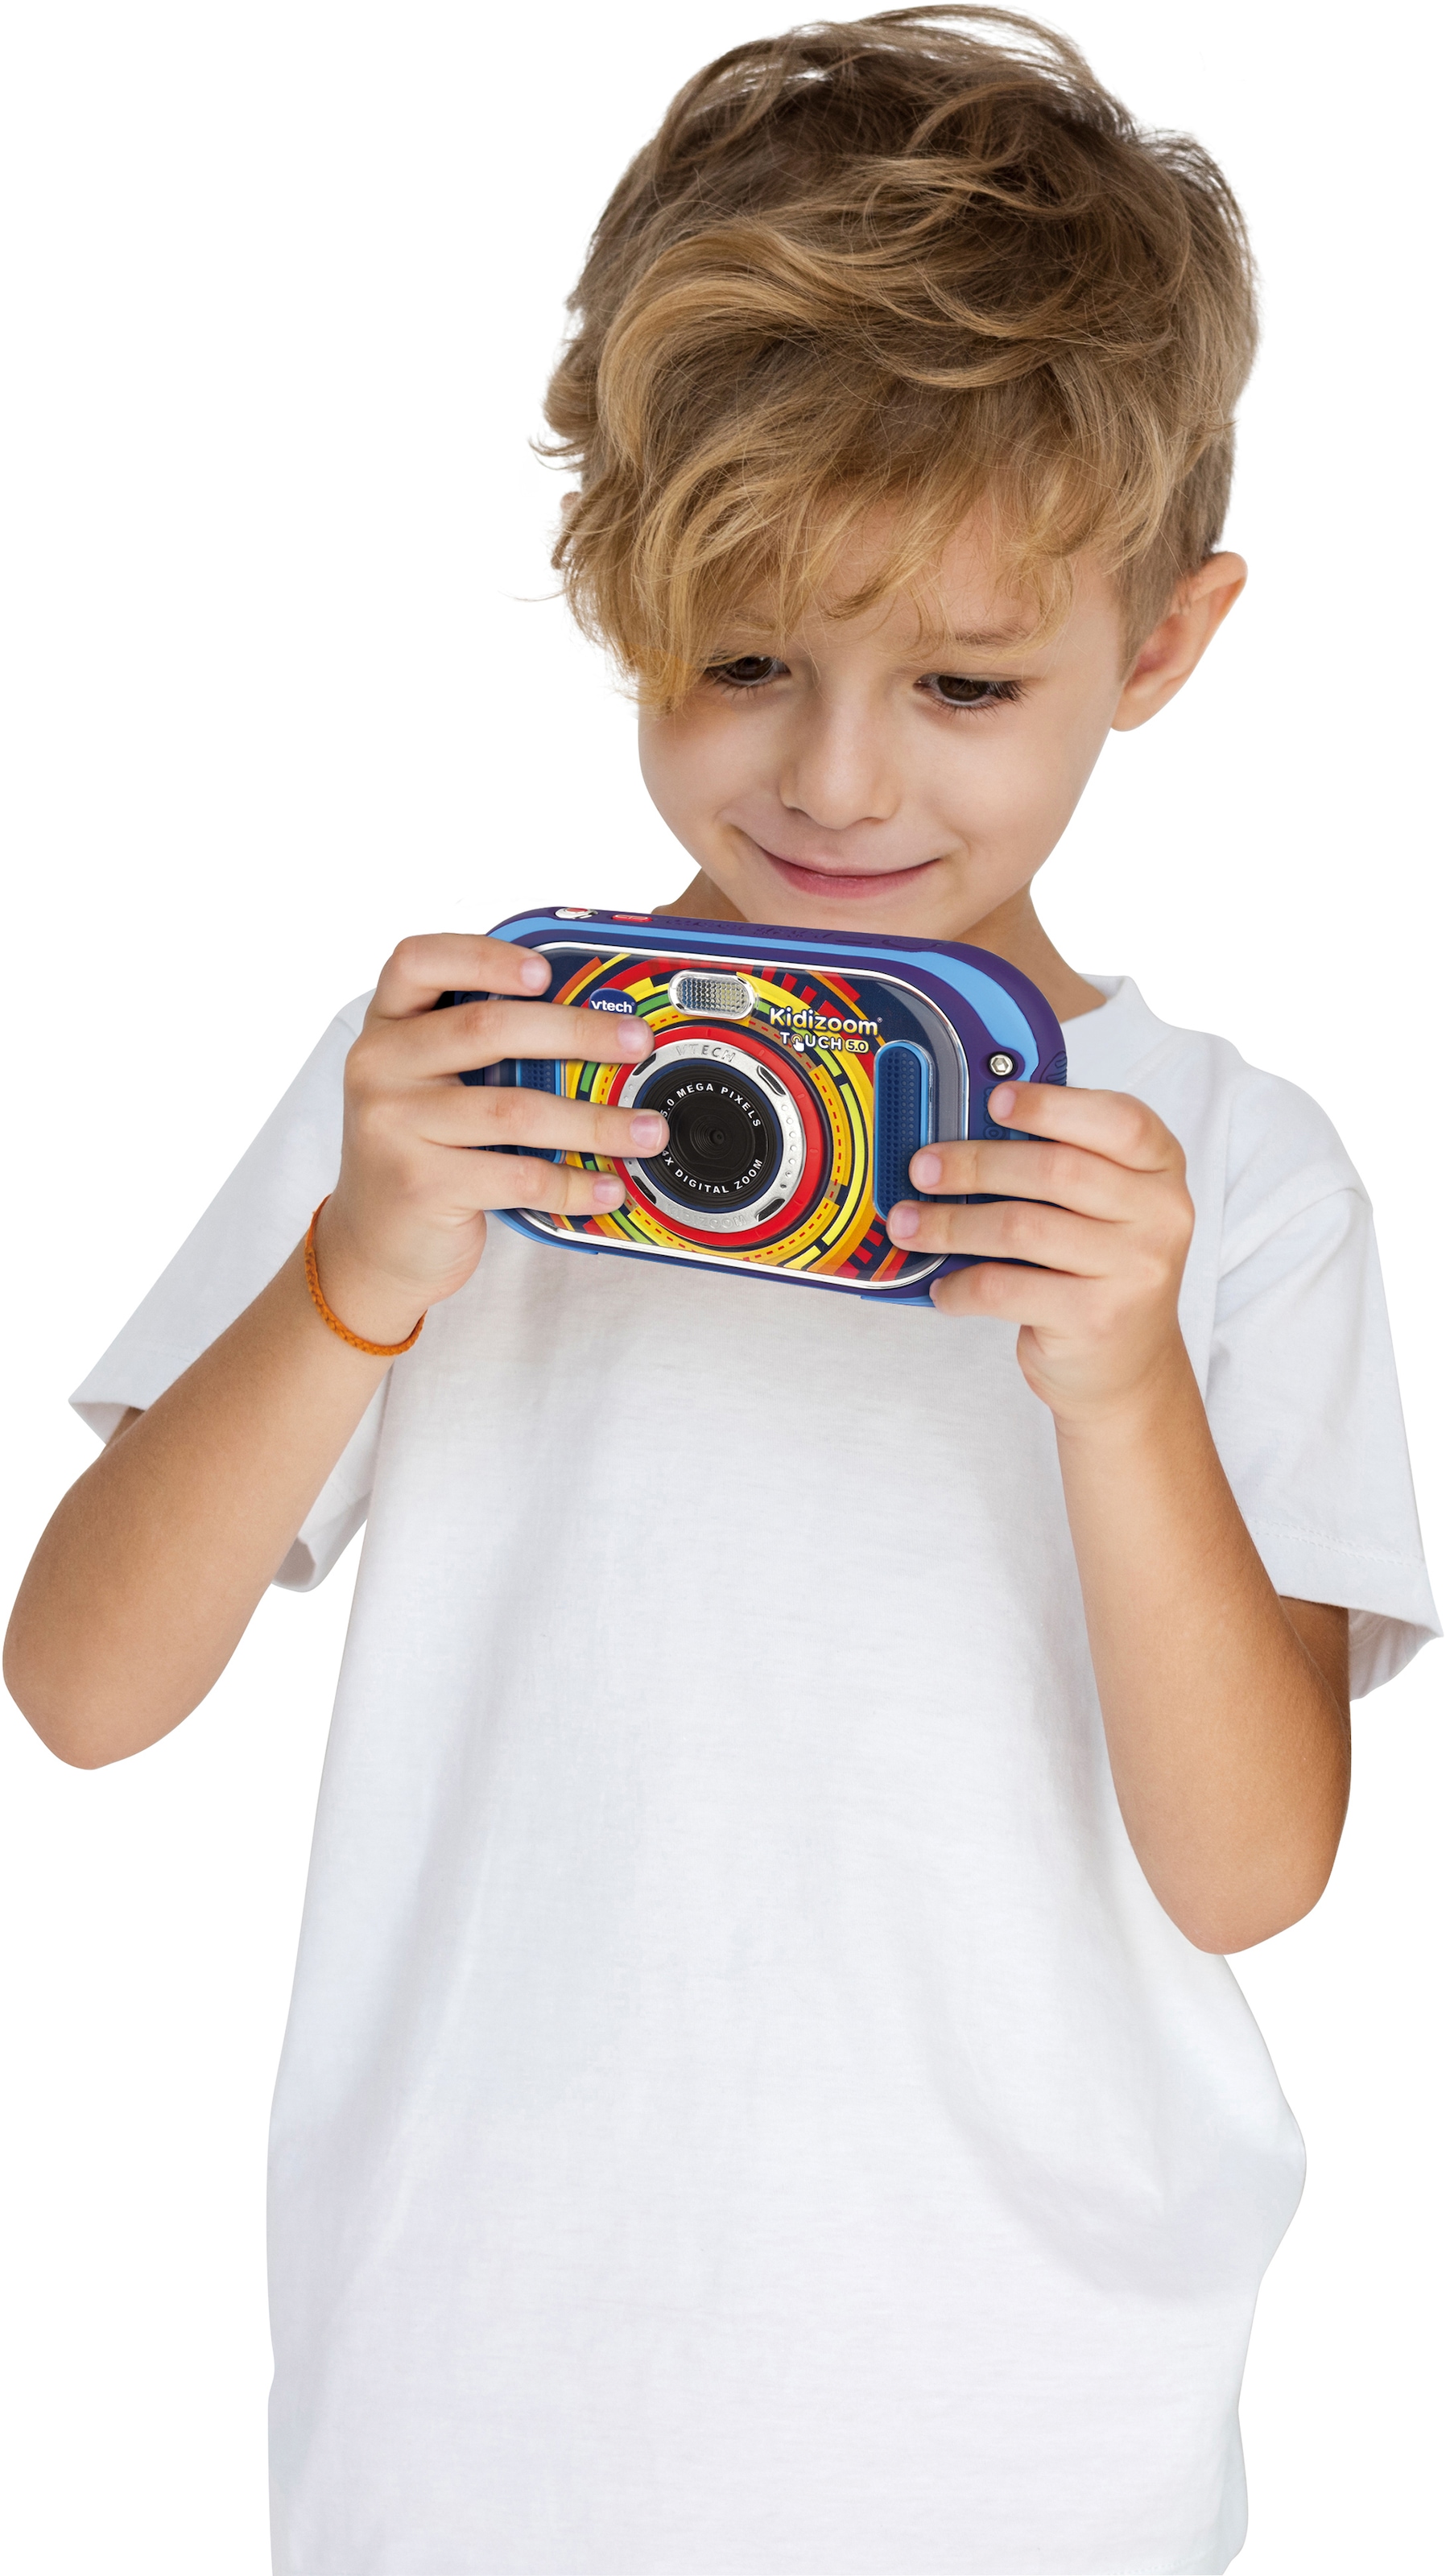 Vtech® Kinderkamera »KidiZoom Touch 5.0, blau«, 5 MP, inklusive Tragetasche  bei